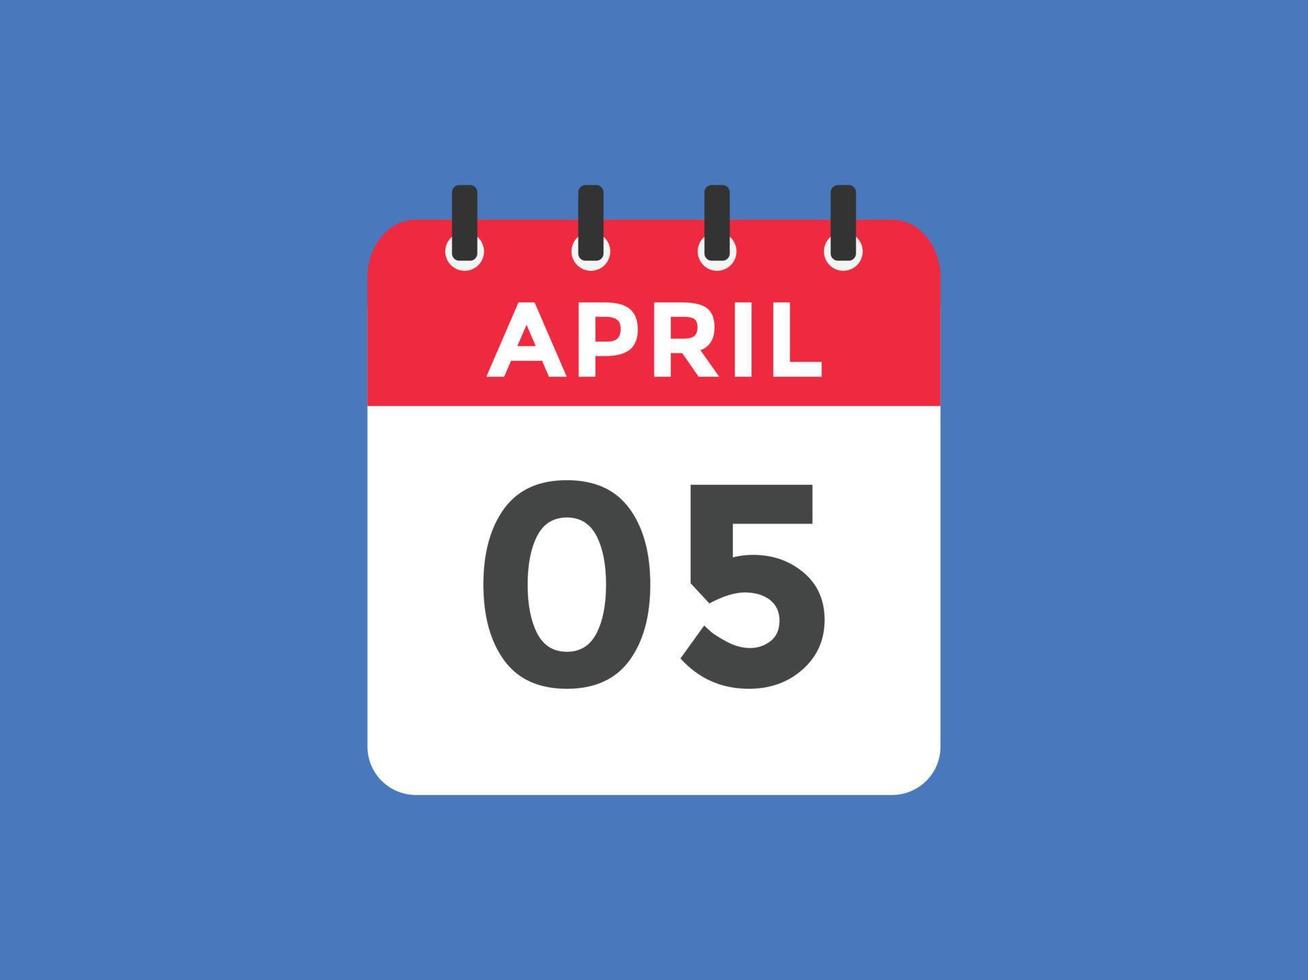 april 5 kalender påminnelse. 5:e april dagligen kalender ikon mall. kalender 5:e april ikon design mall. vektor illustration